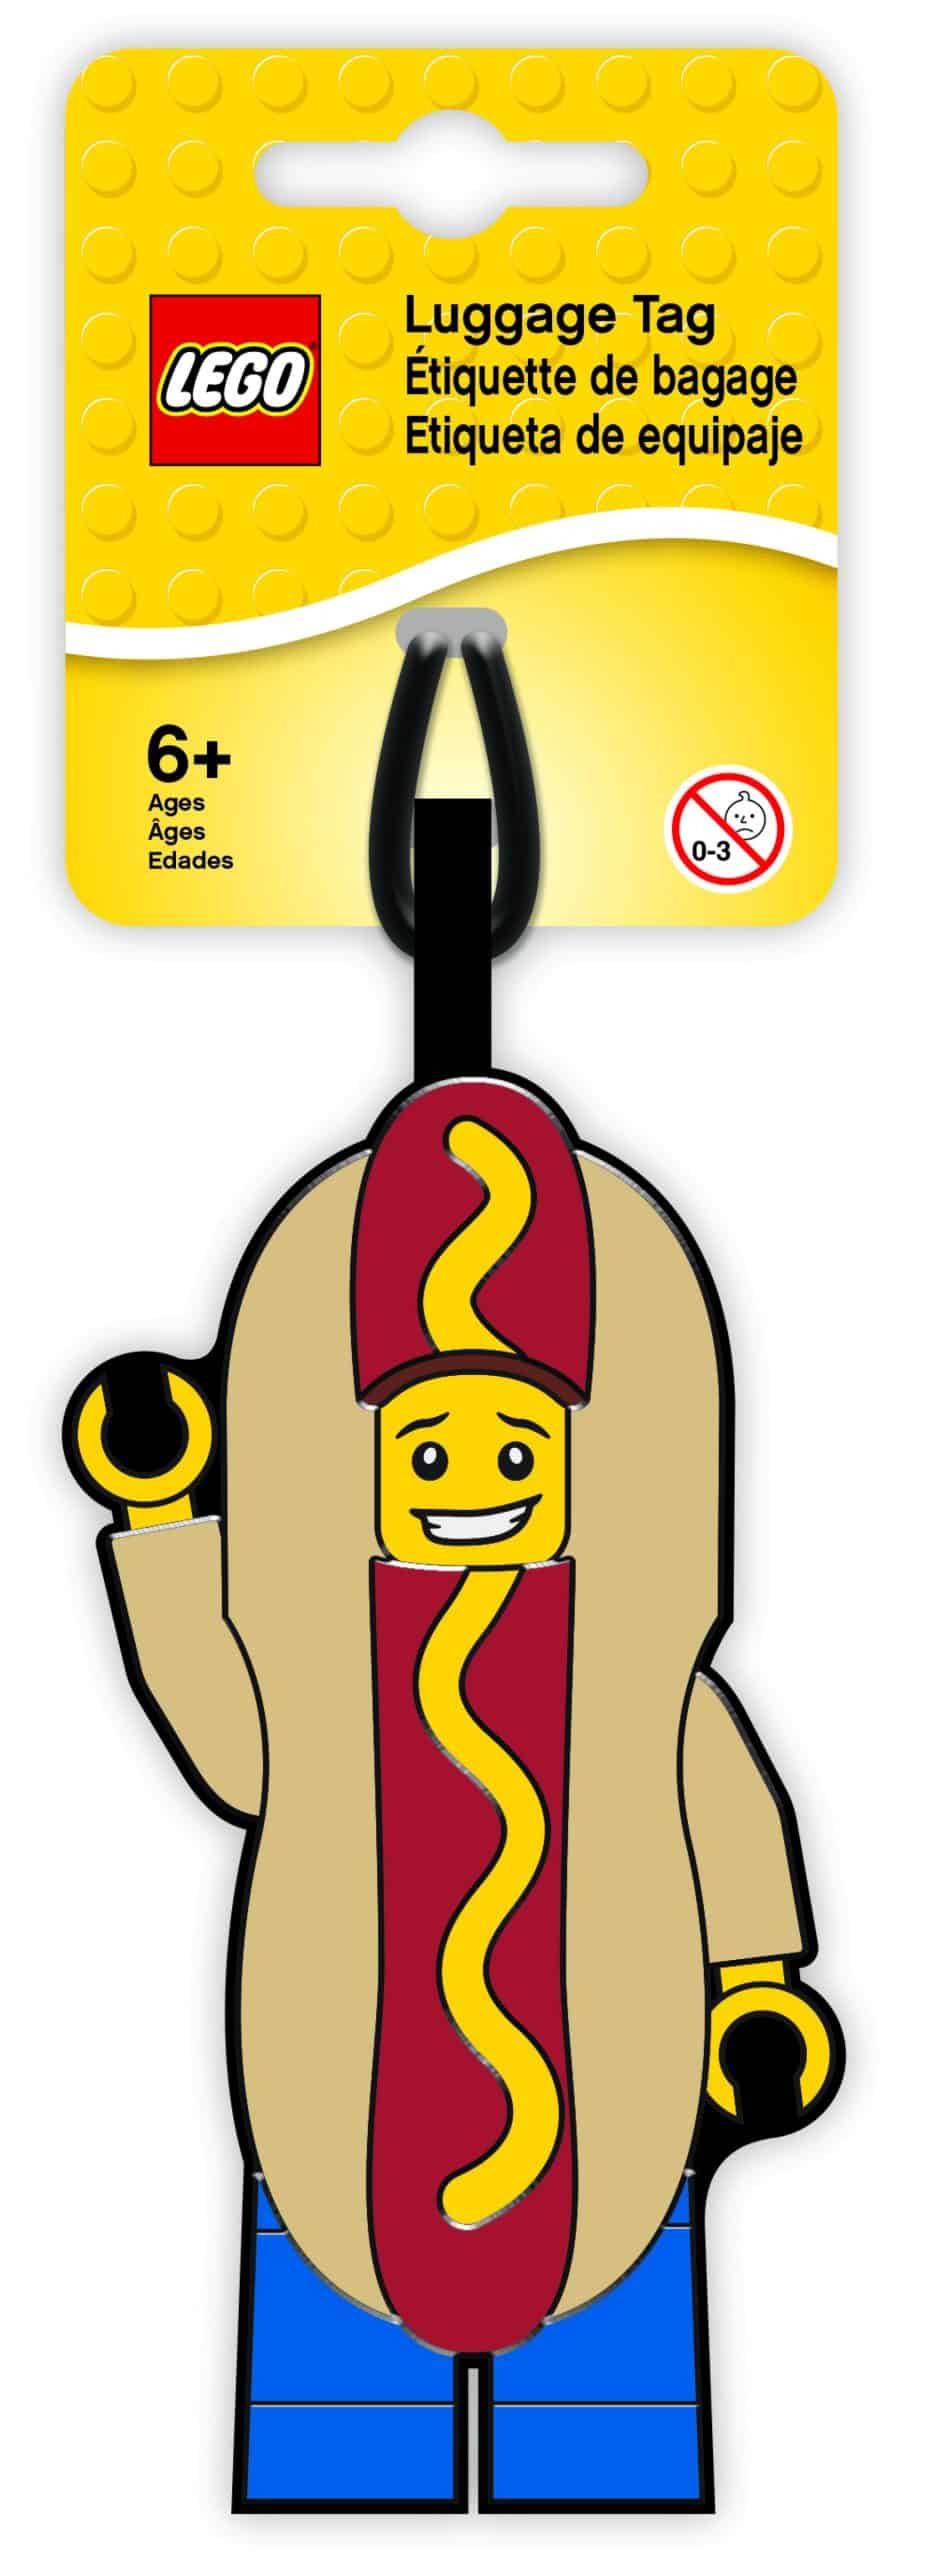 etiquette de bagage homme hot dog lego 5005582 scaled